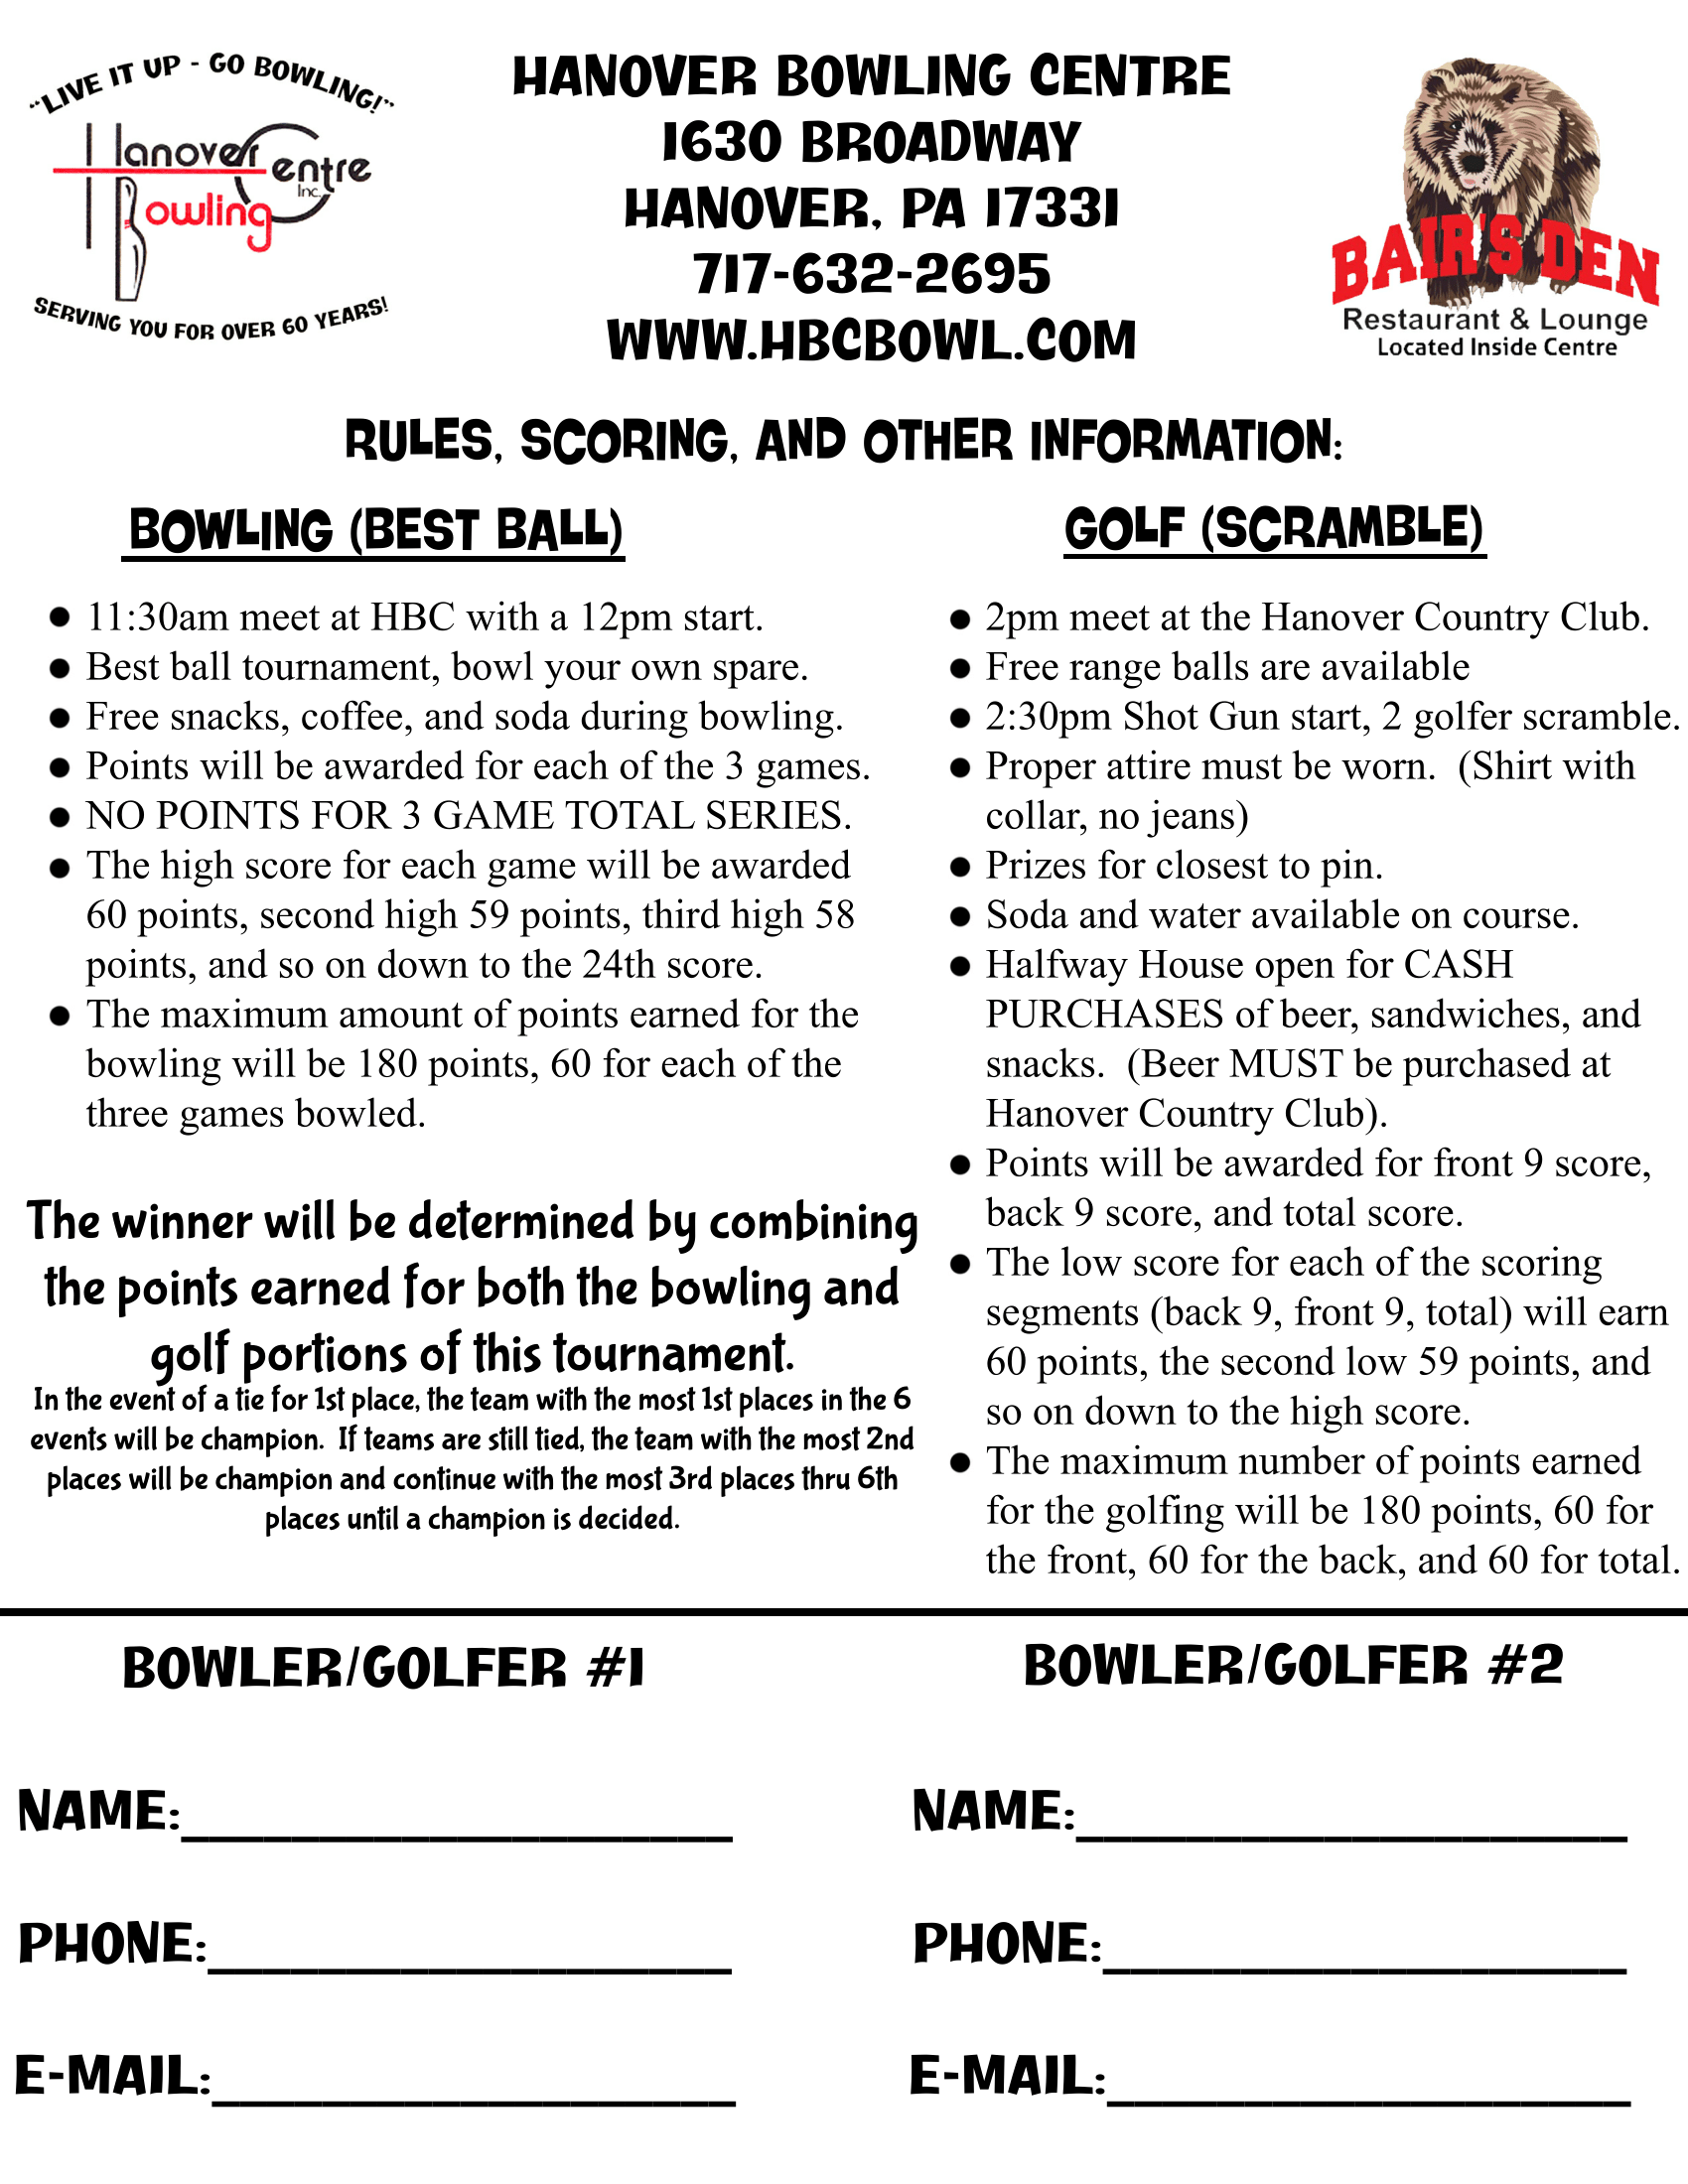 bowl-golf back.pdf2018-1